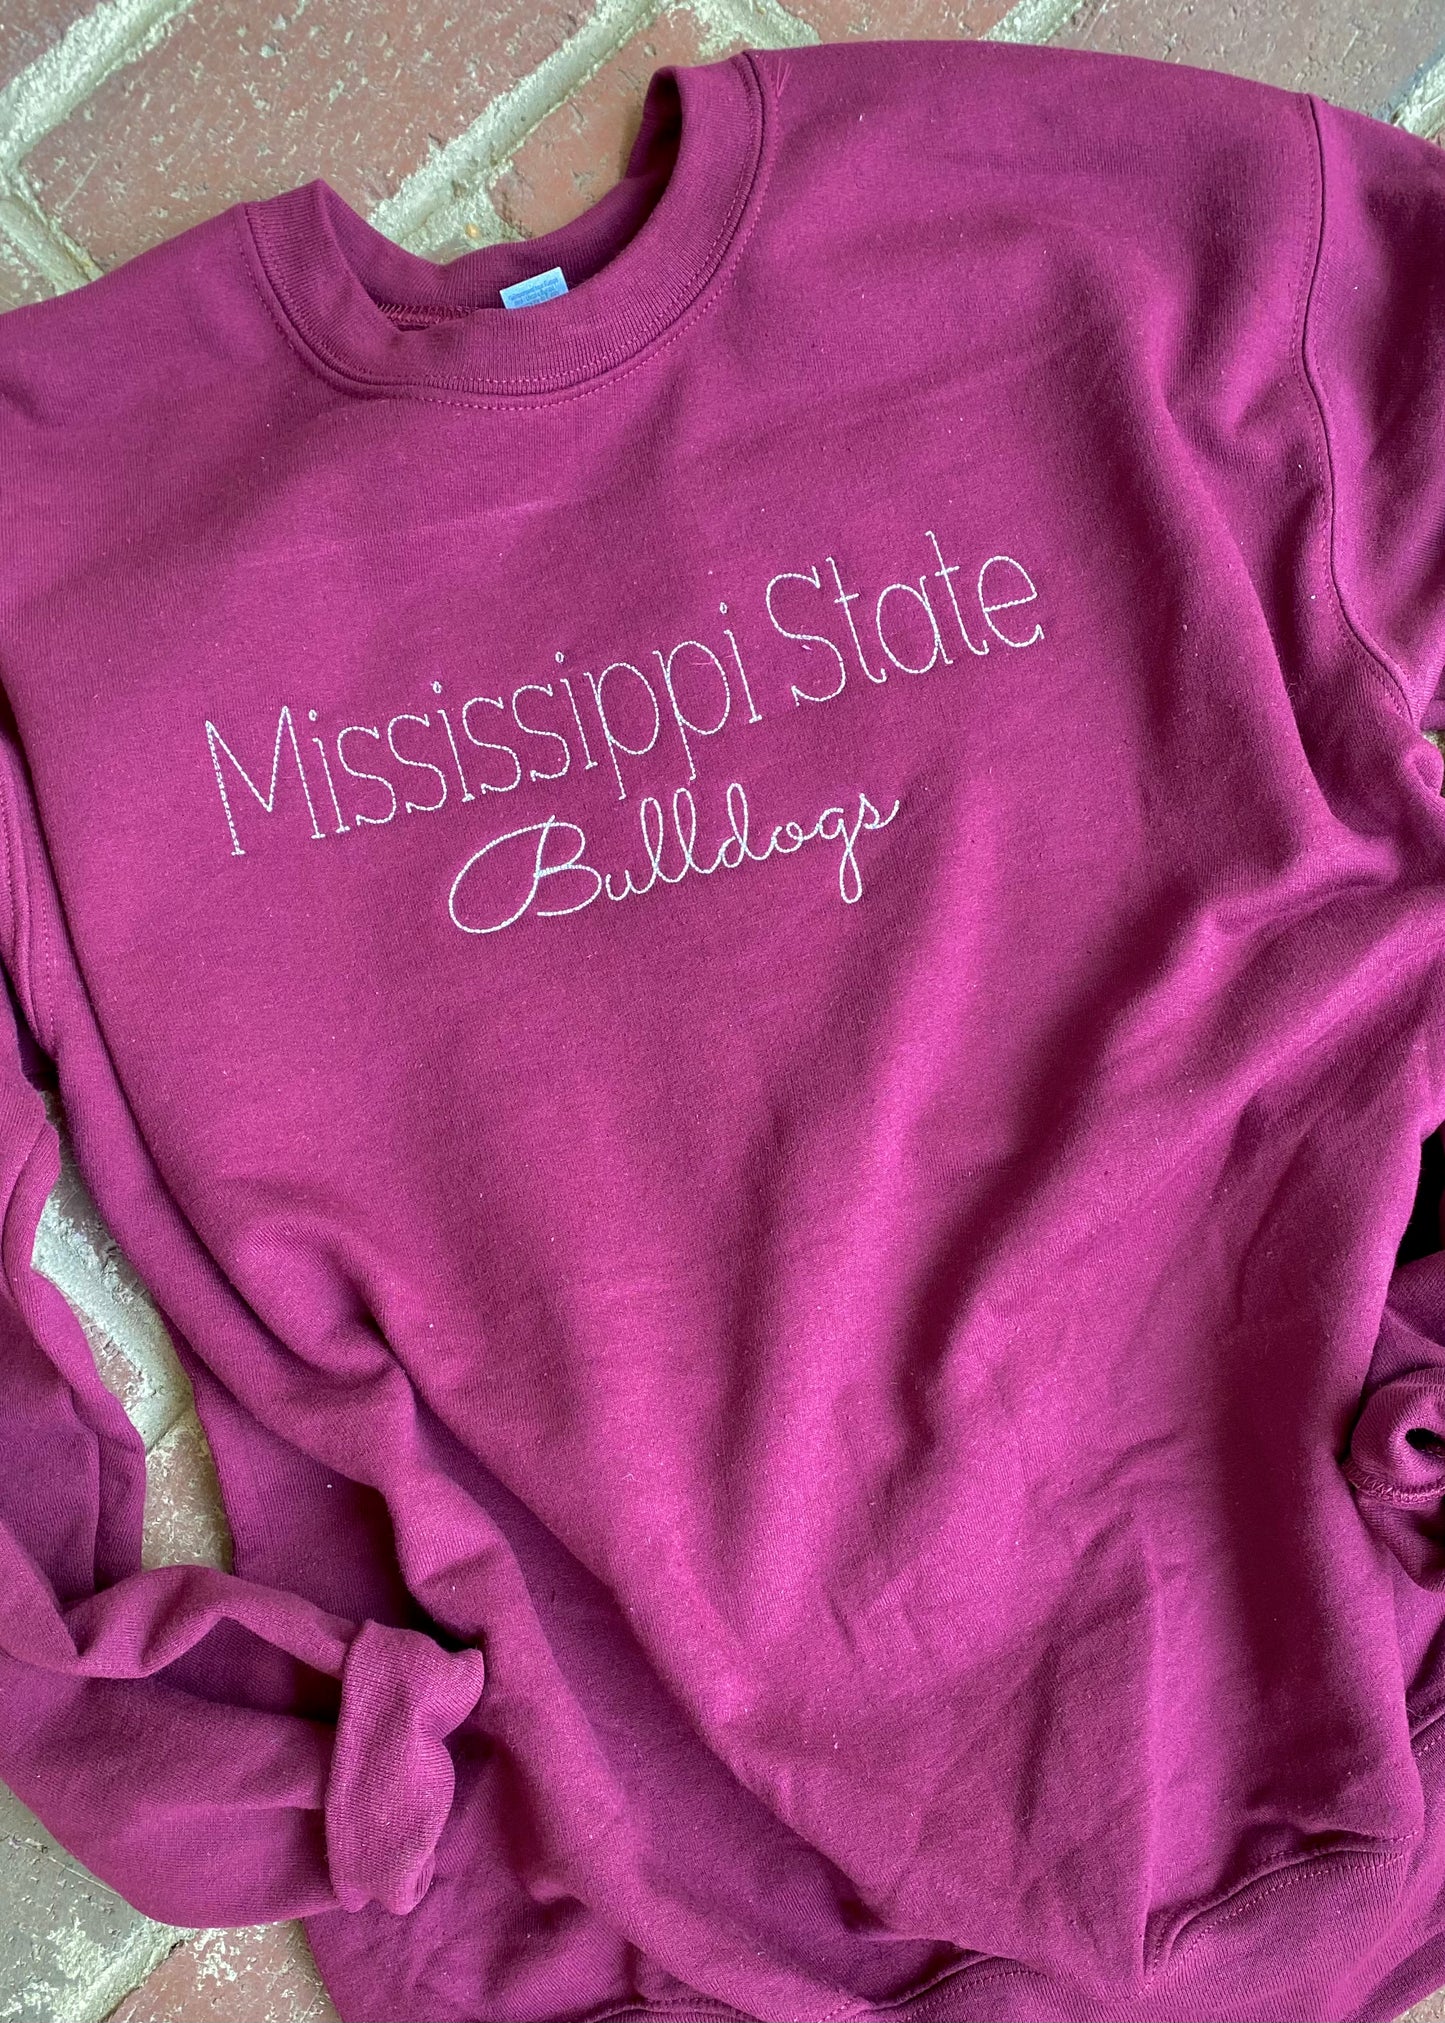 Mississippi State Bulldogs Stitched  Sweatshirt - Maroon